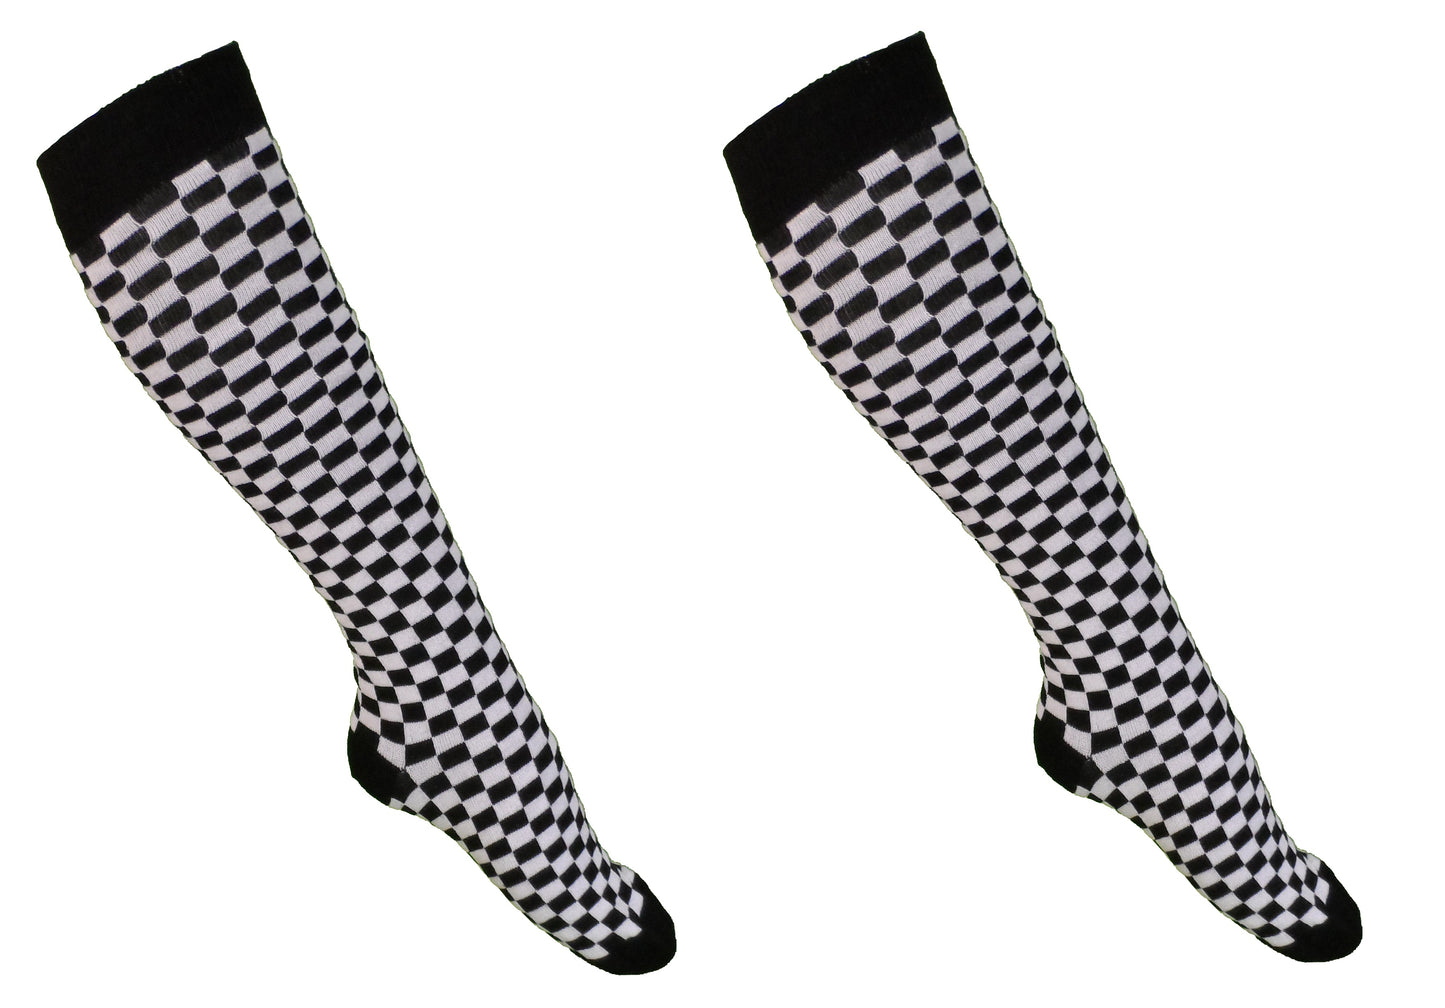 Ladies 2 Pair Pack of Black/White Checked Knee High Socks